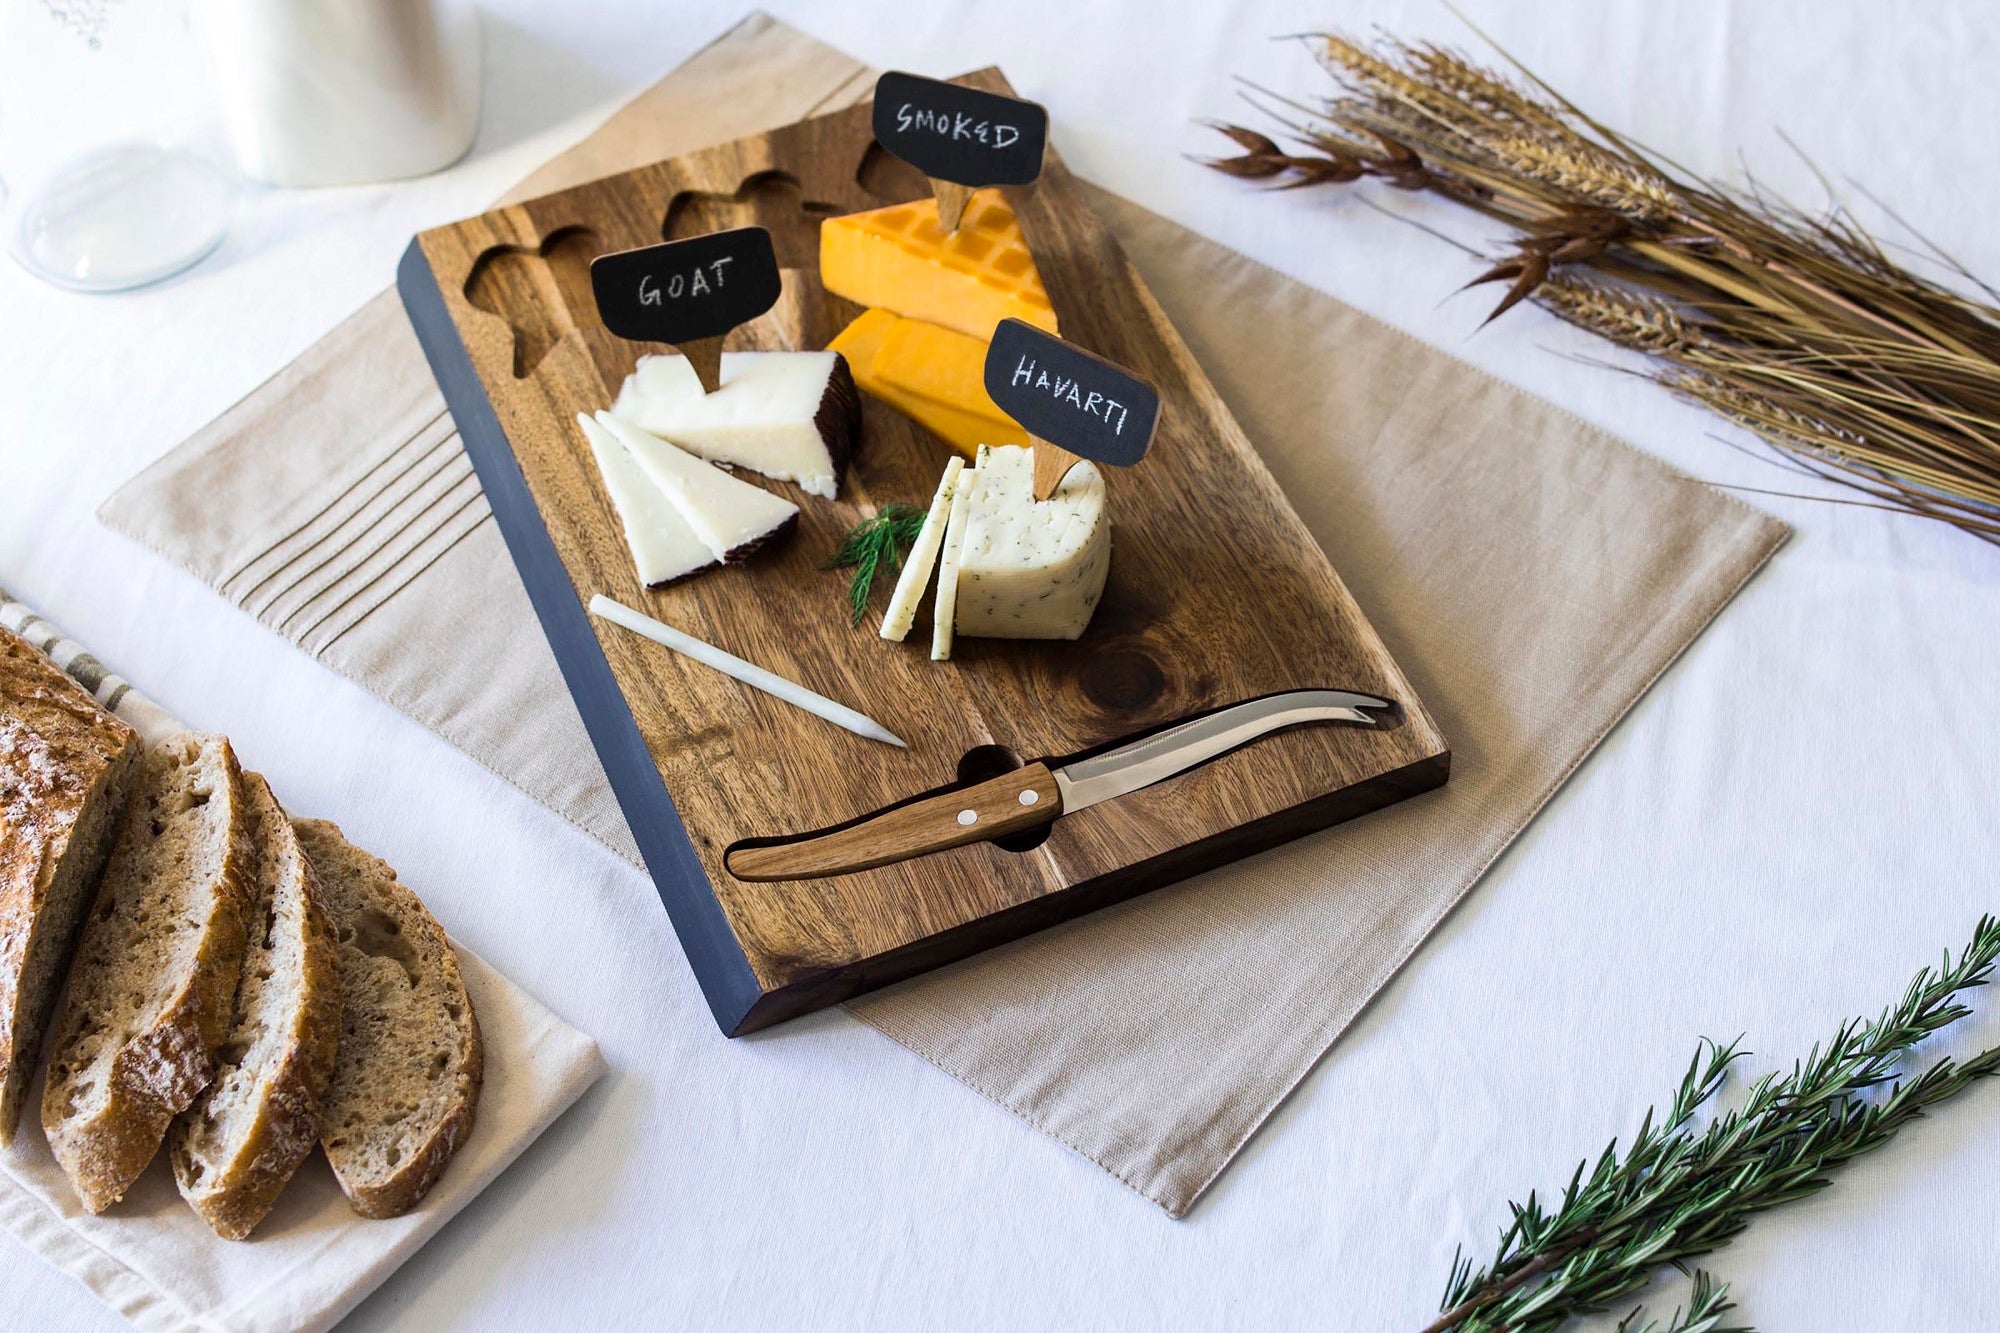 Toronto Blue Jays - Delio Acacia Cheese Cutting Board & Tools Set